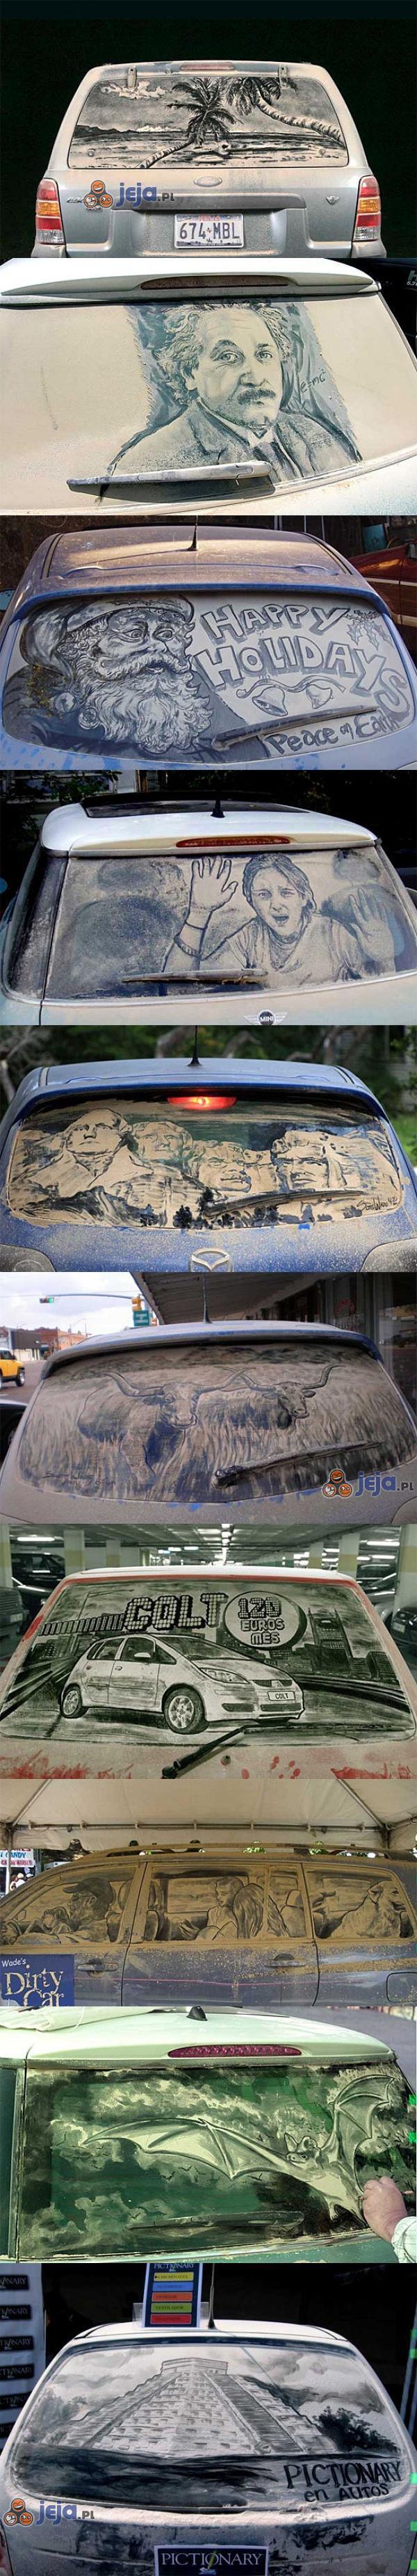 Sztuka na brudnych autach